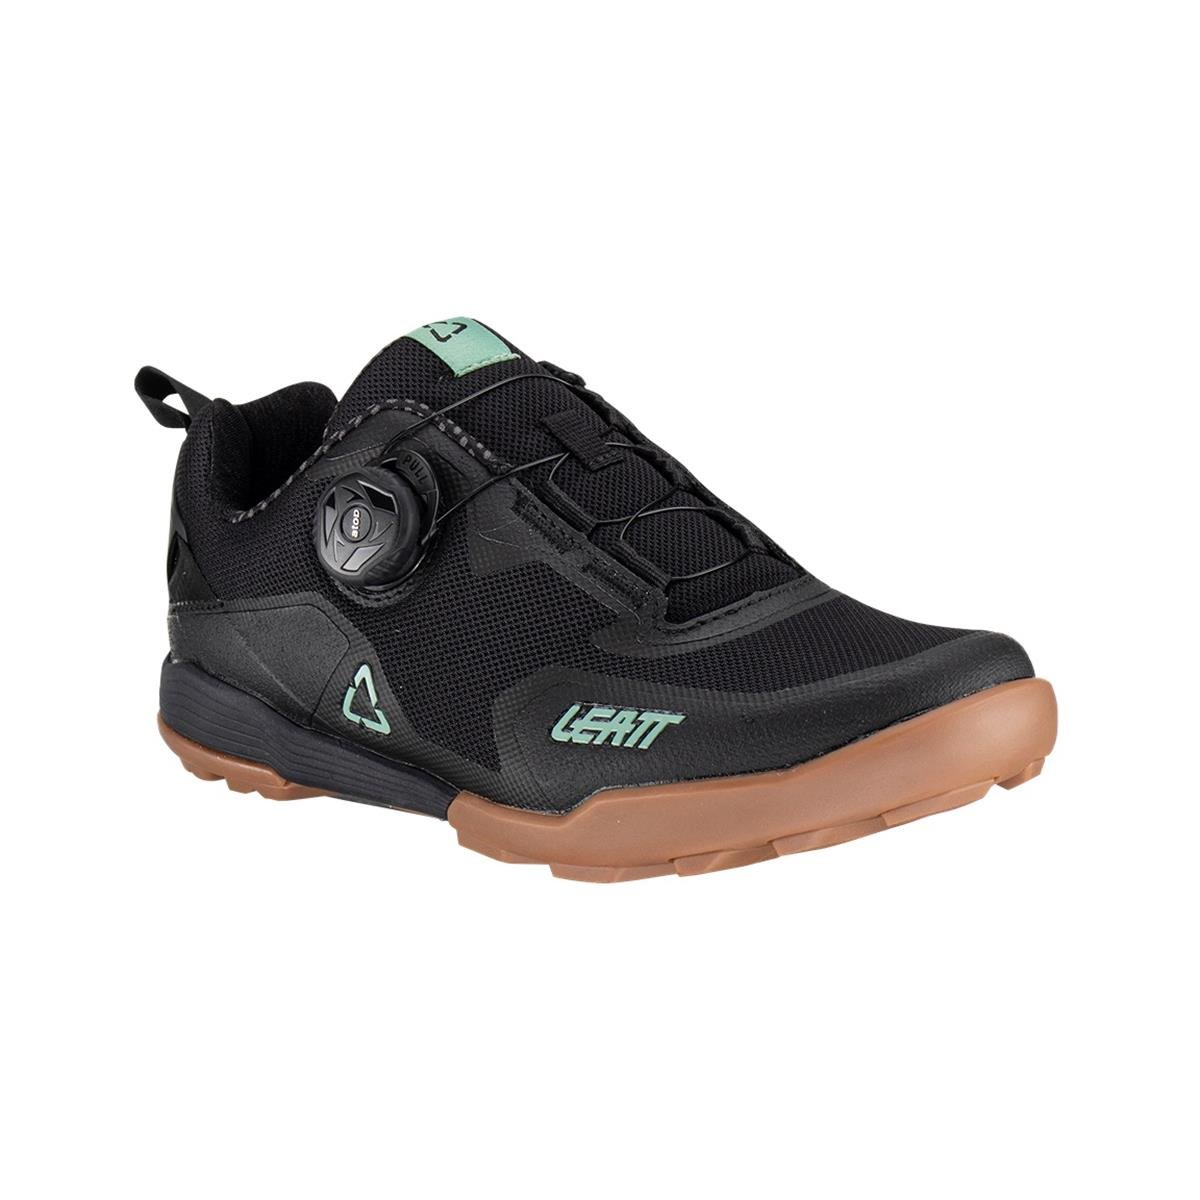 Leatt Girls Bike Shoes 6.0 Clip Black